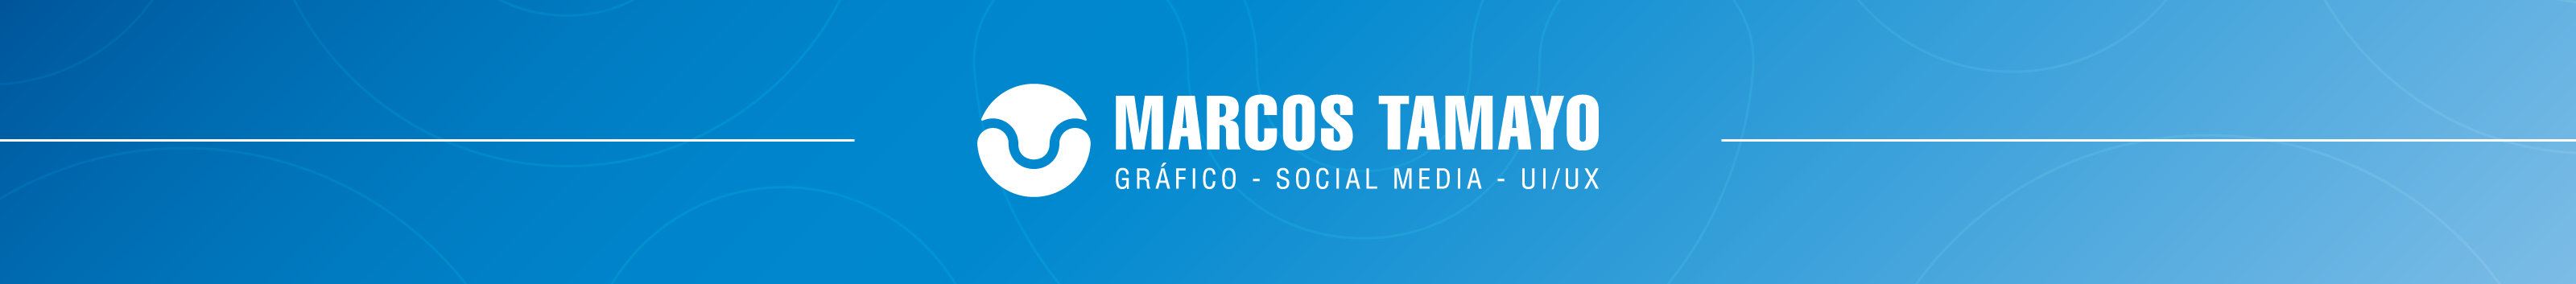 Marcos Tamayo's profile banner